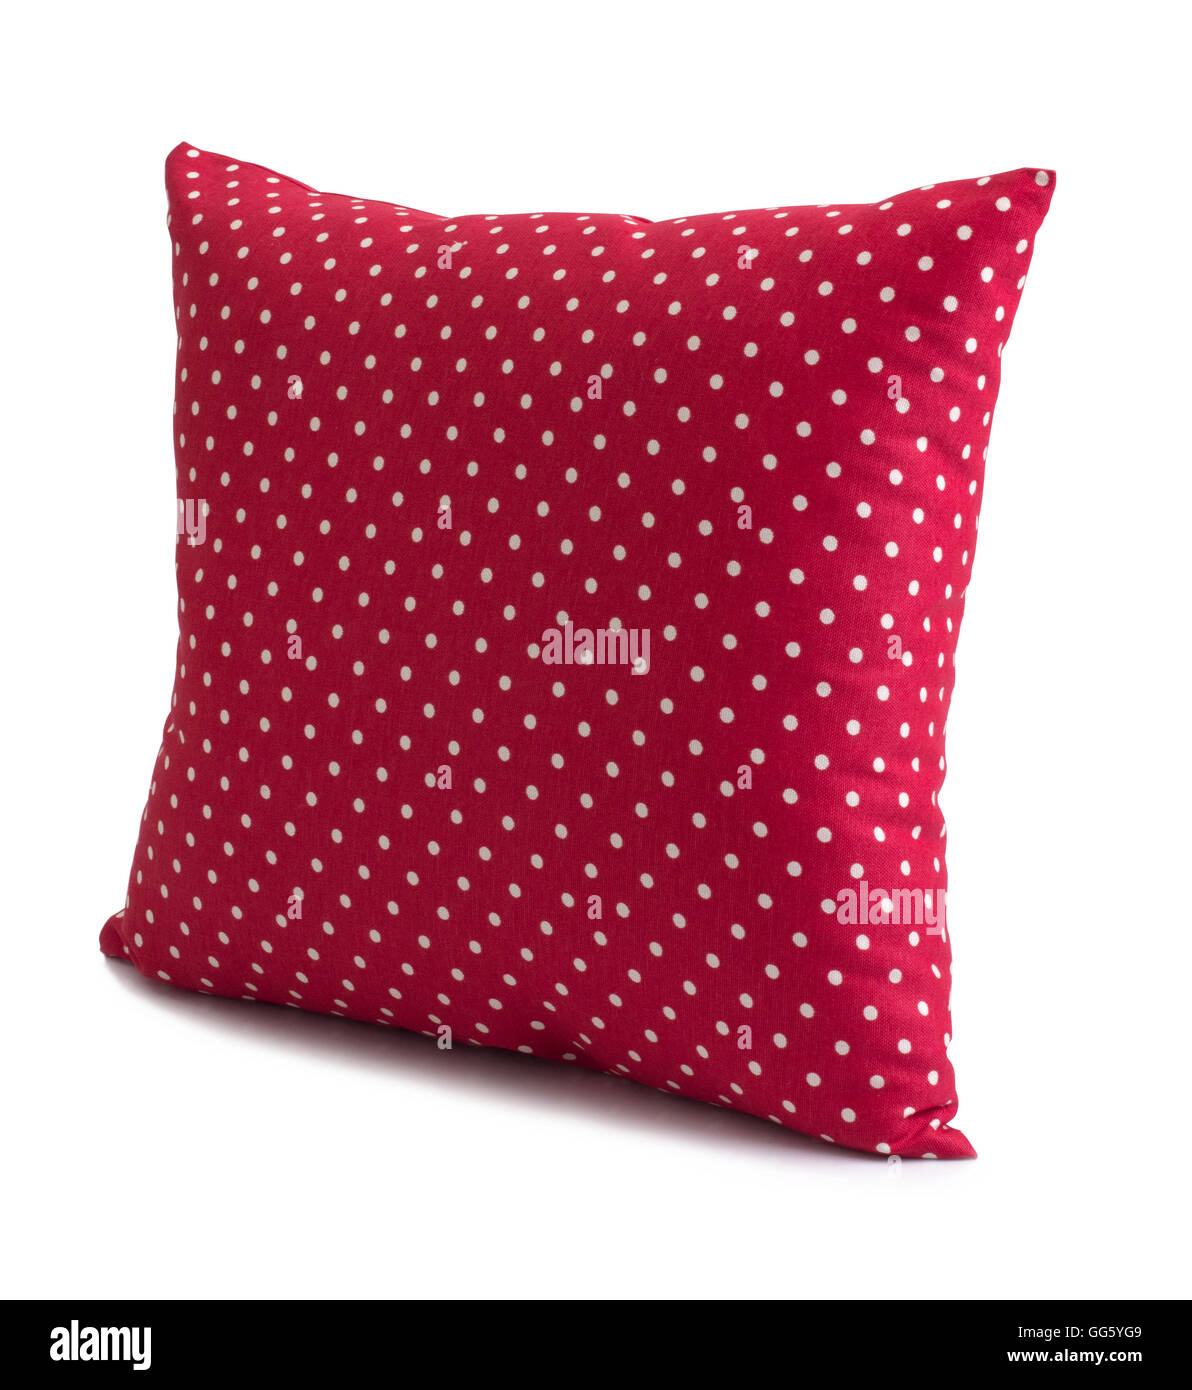 Polka dot red cushion isolated on white background Stock Photo